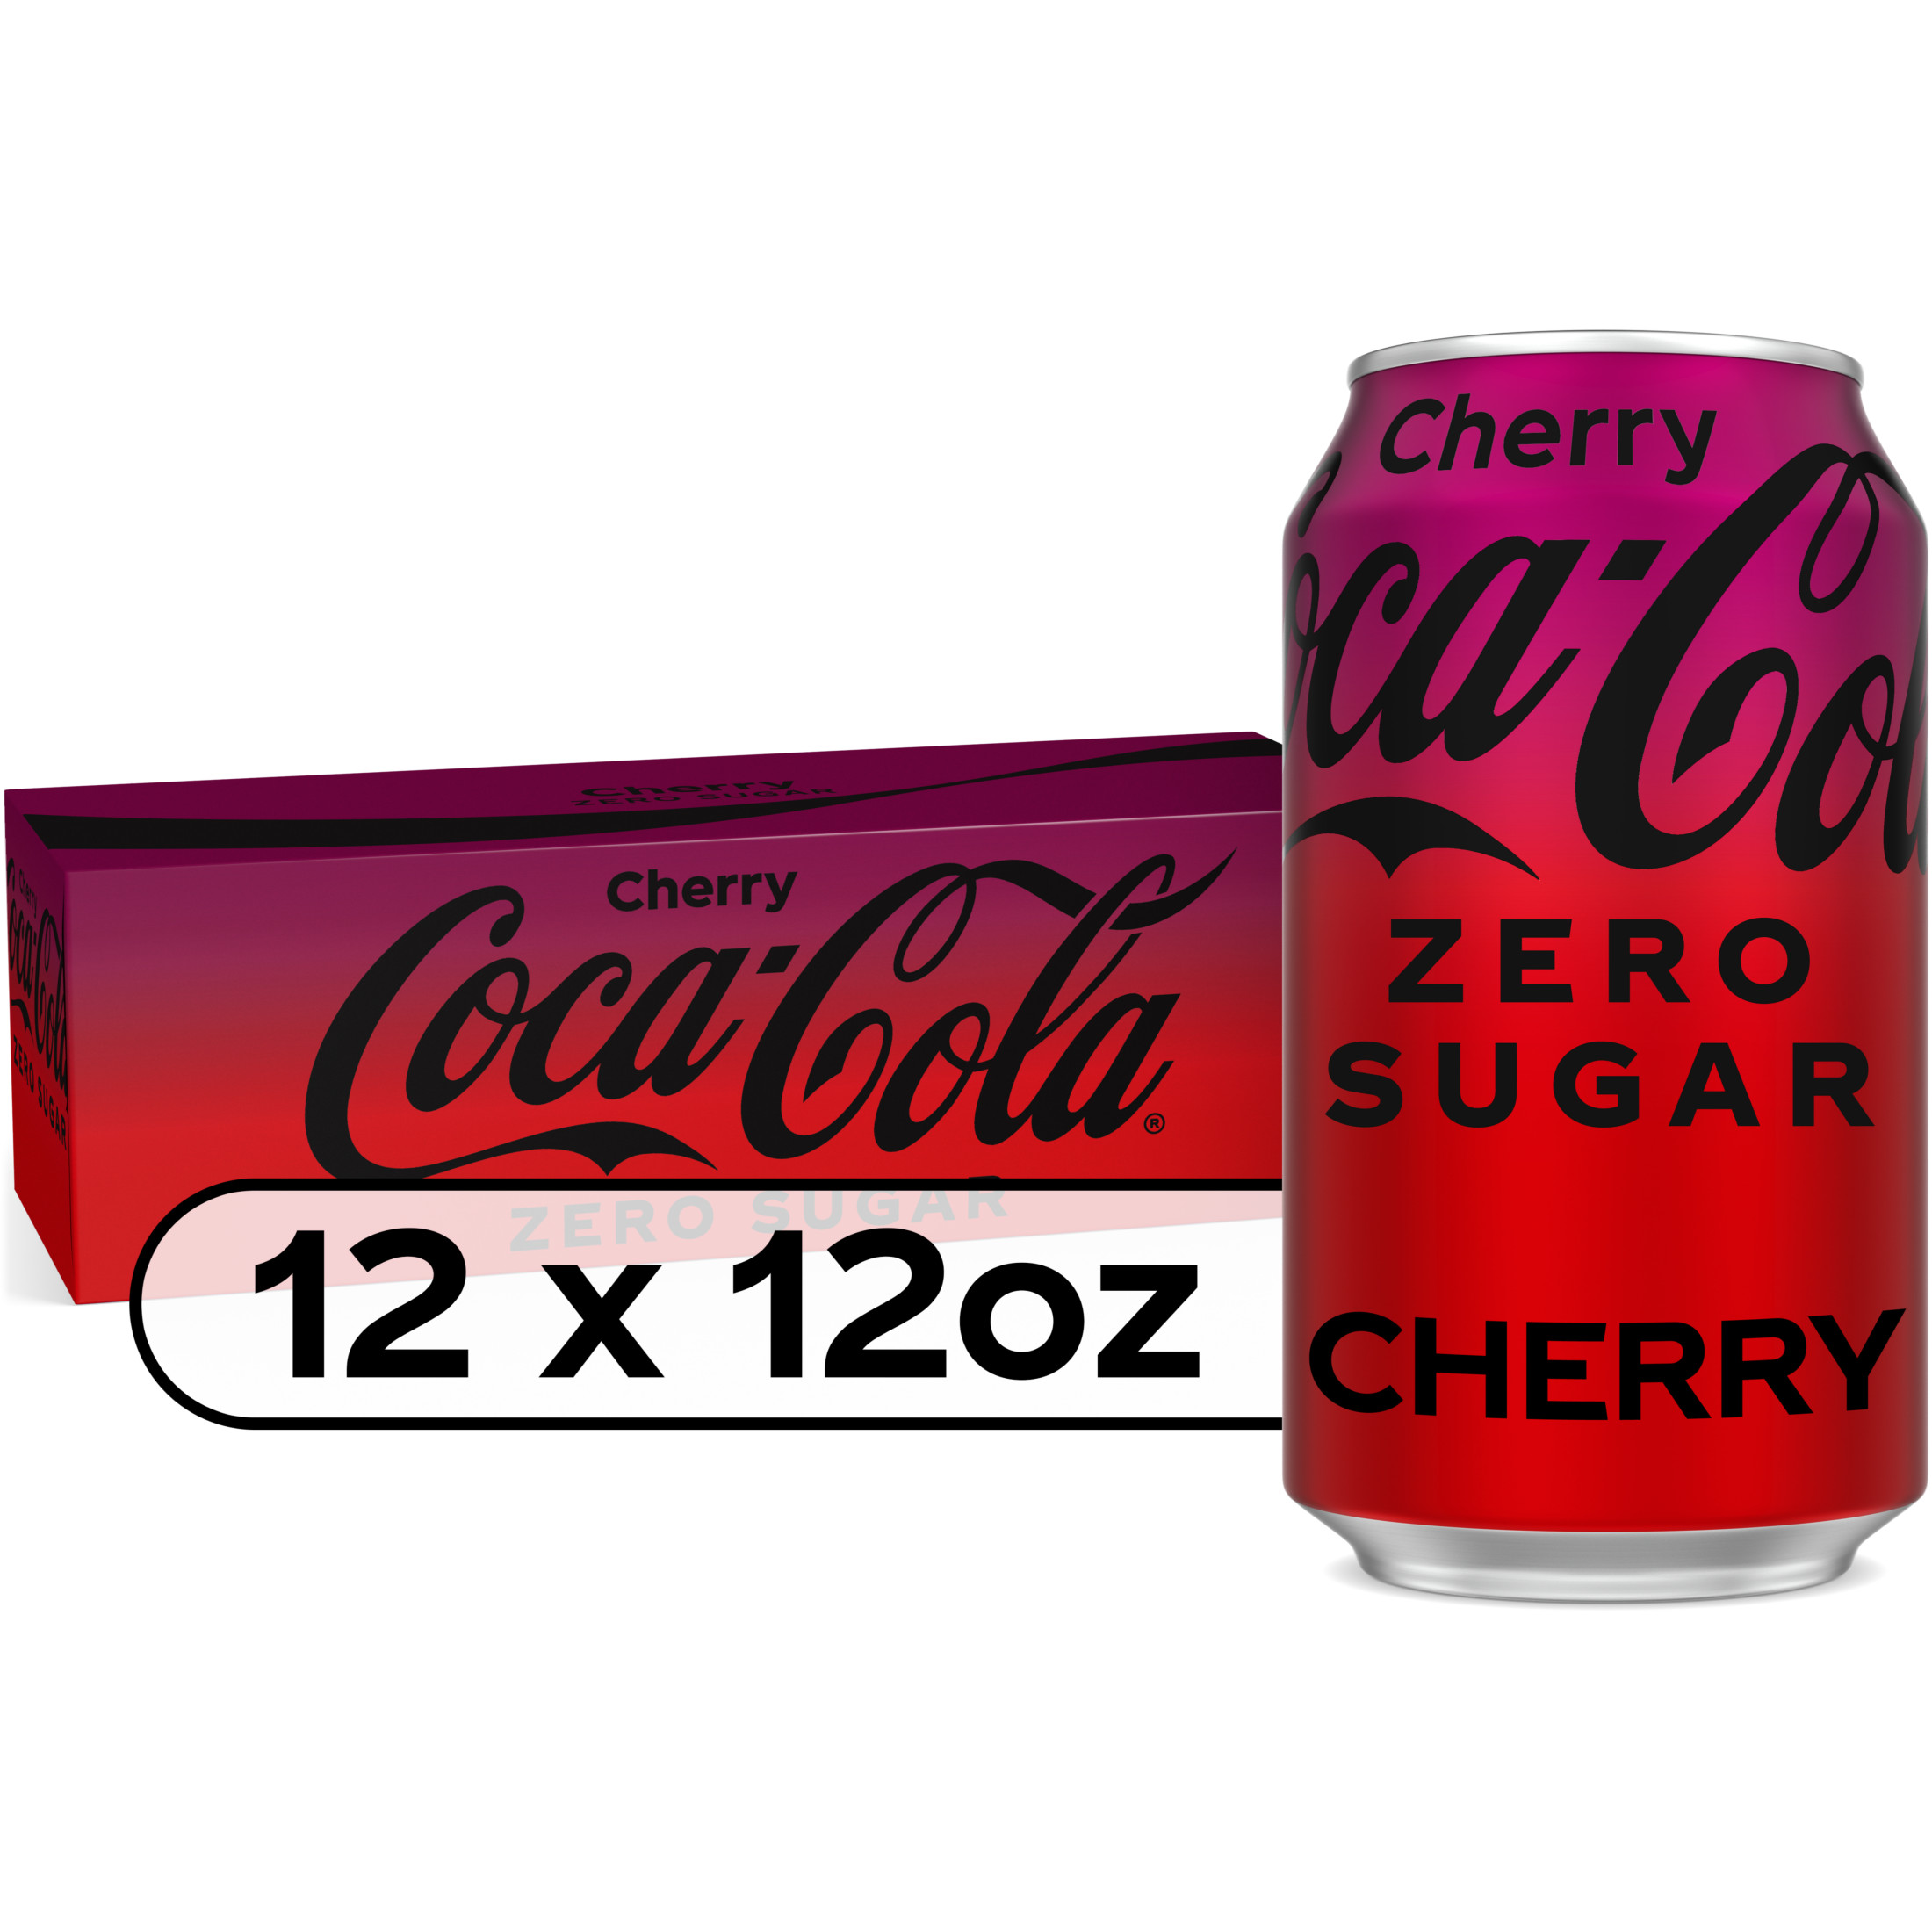 Coca-Cola Zero Sugar Cherry Soda Pop, 12 fl oz, 12 Pack Cans - image 1 of 8